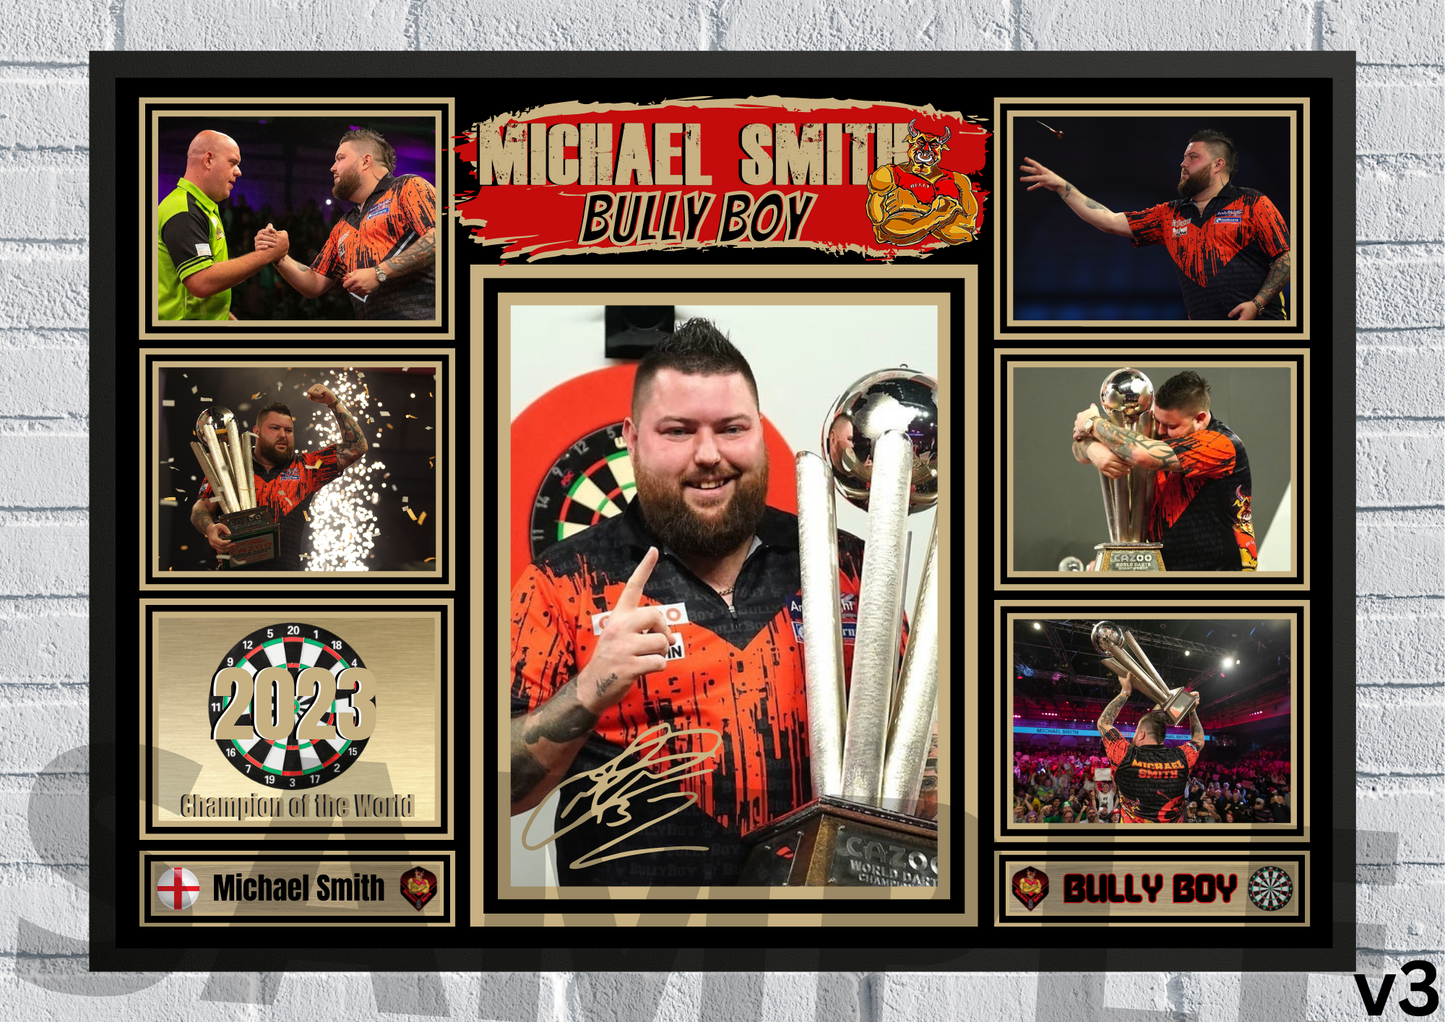 Michael Smith Bully Boy PDC Darts A4/A3 Memorabilia/Collectable signed